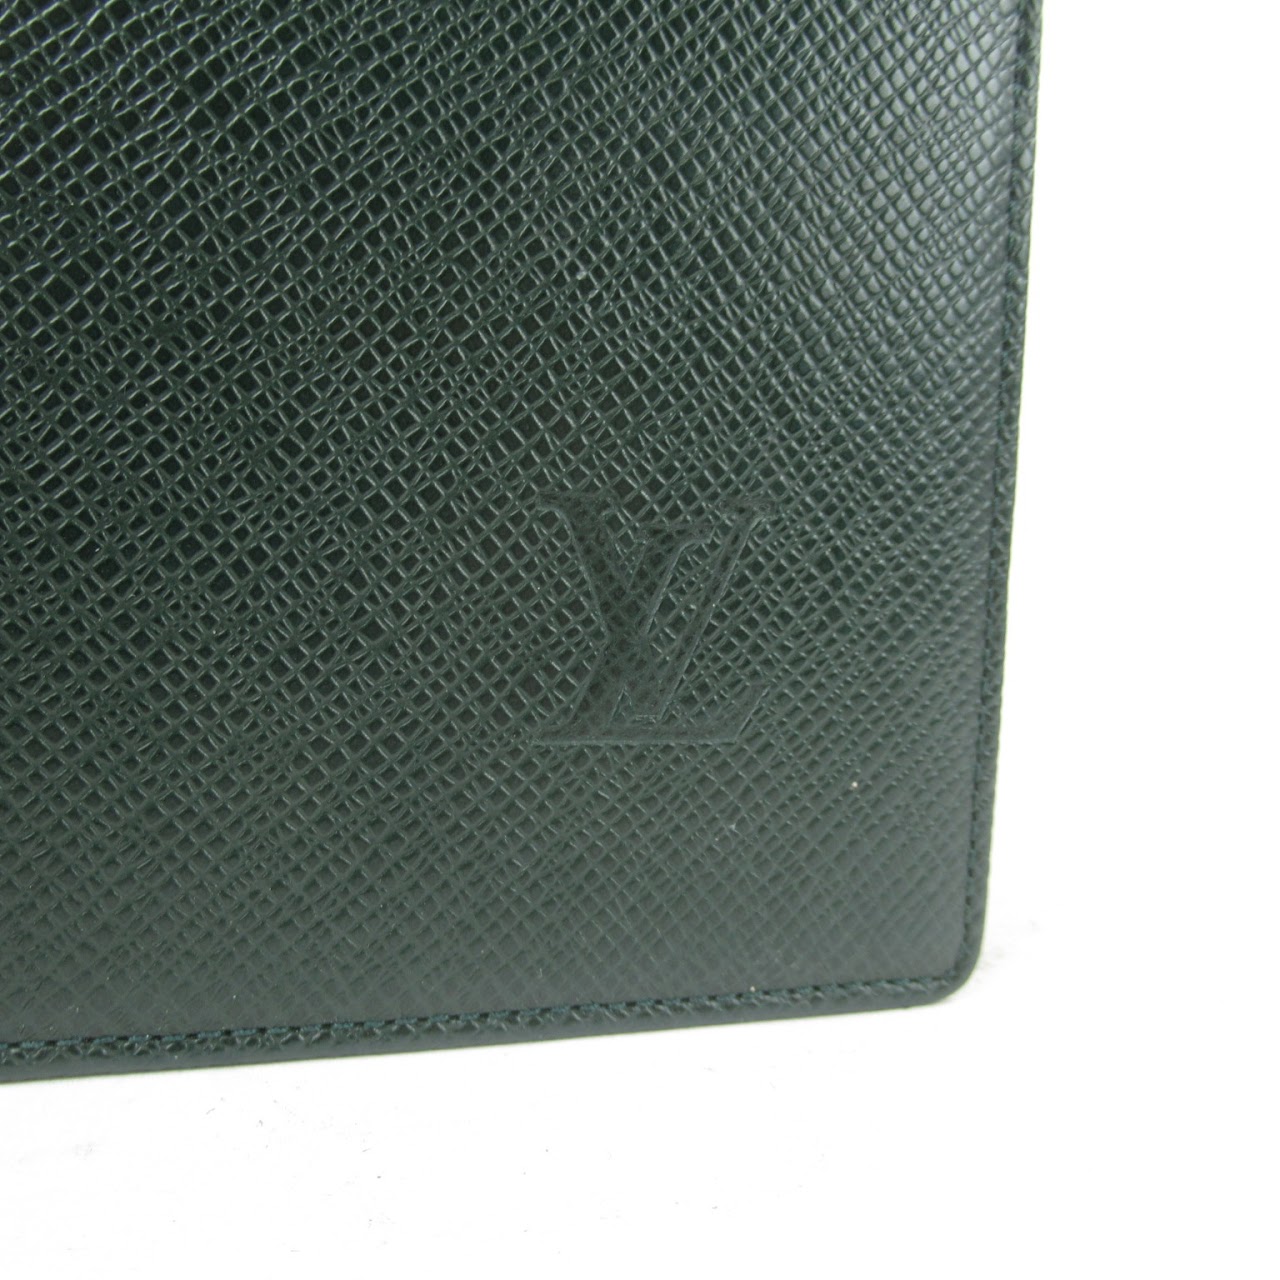 Louis Vuitton Document Folder - 4 For Sale on 1stDibs